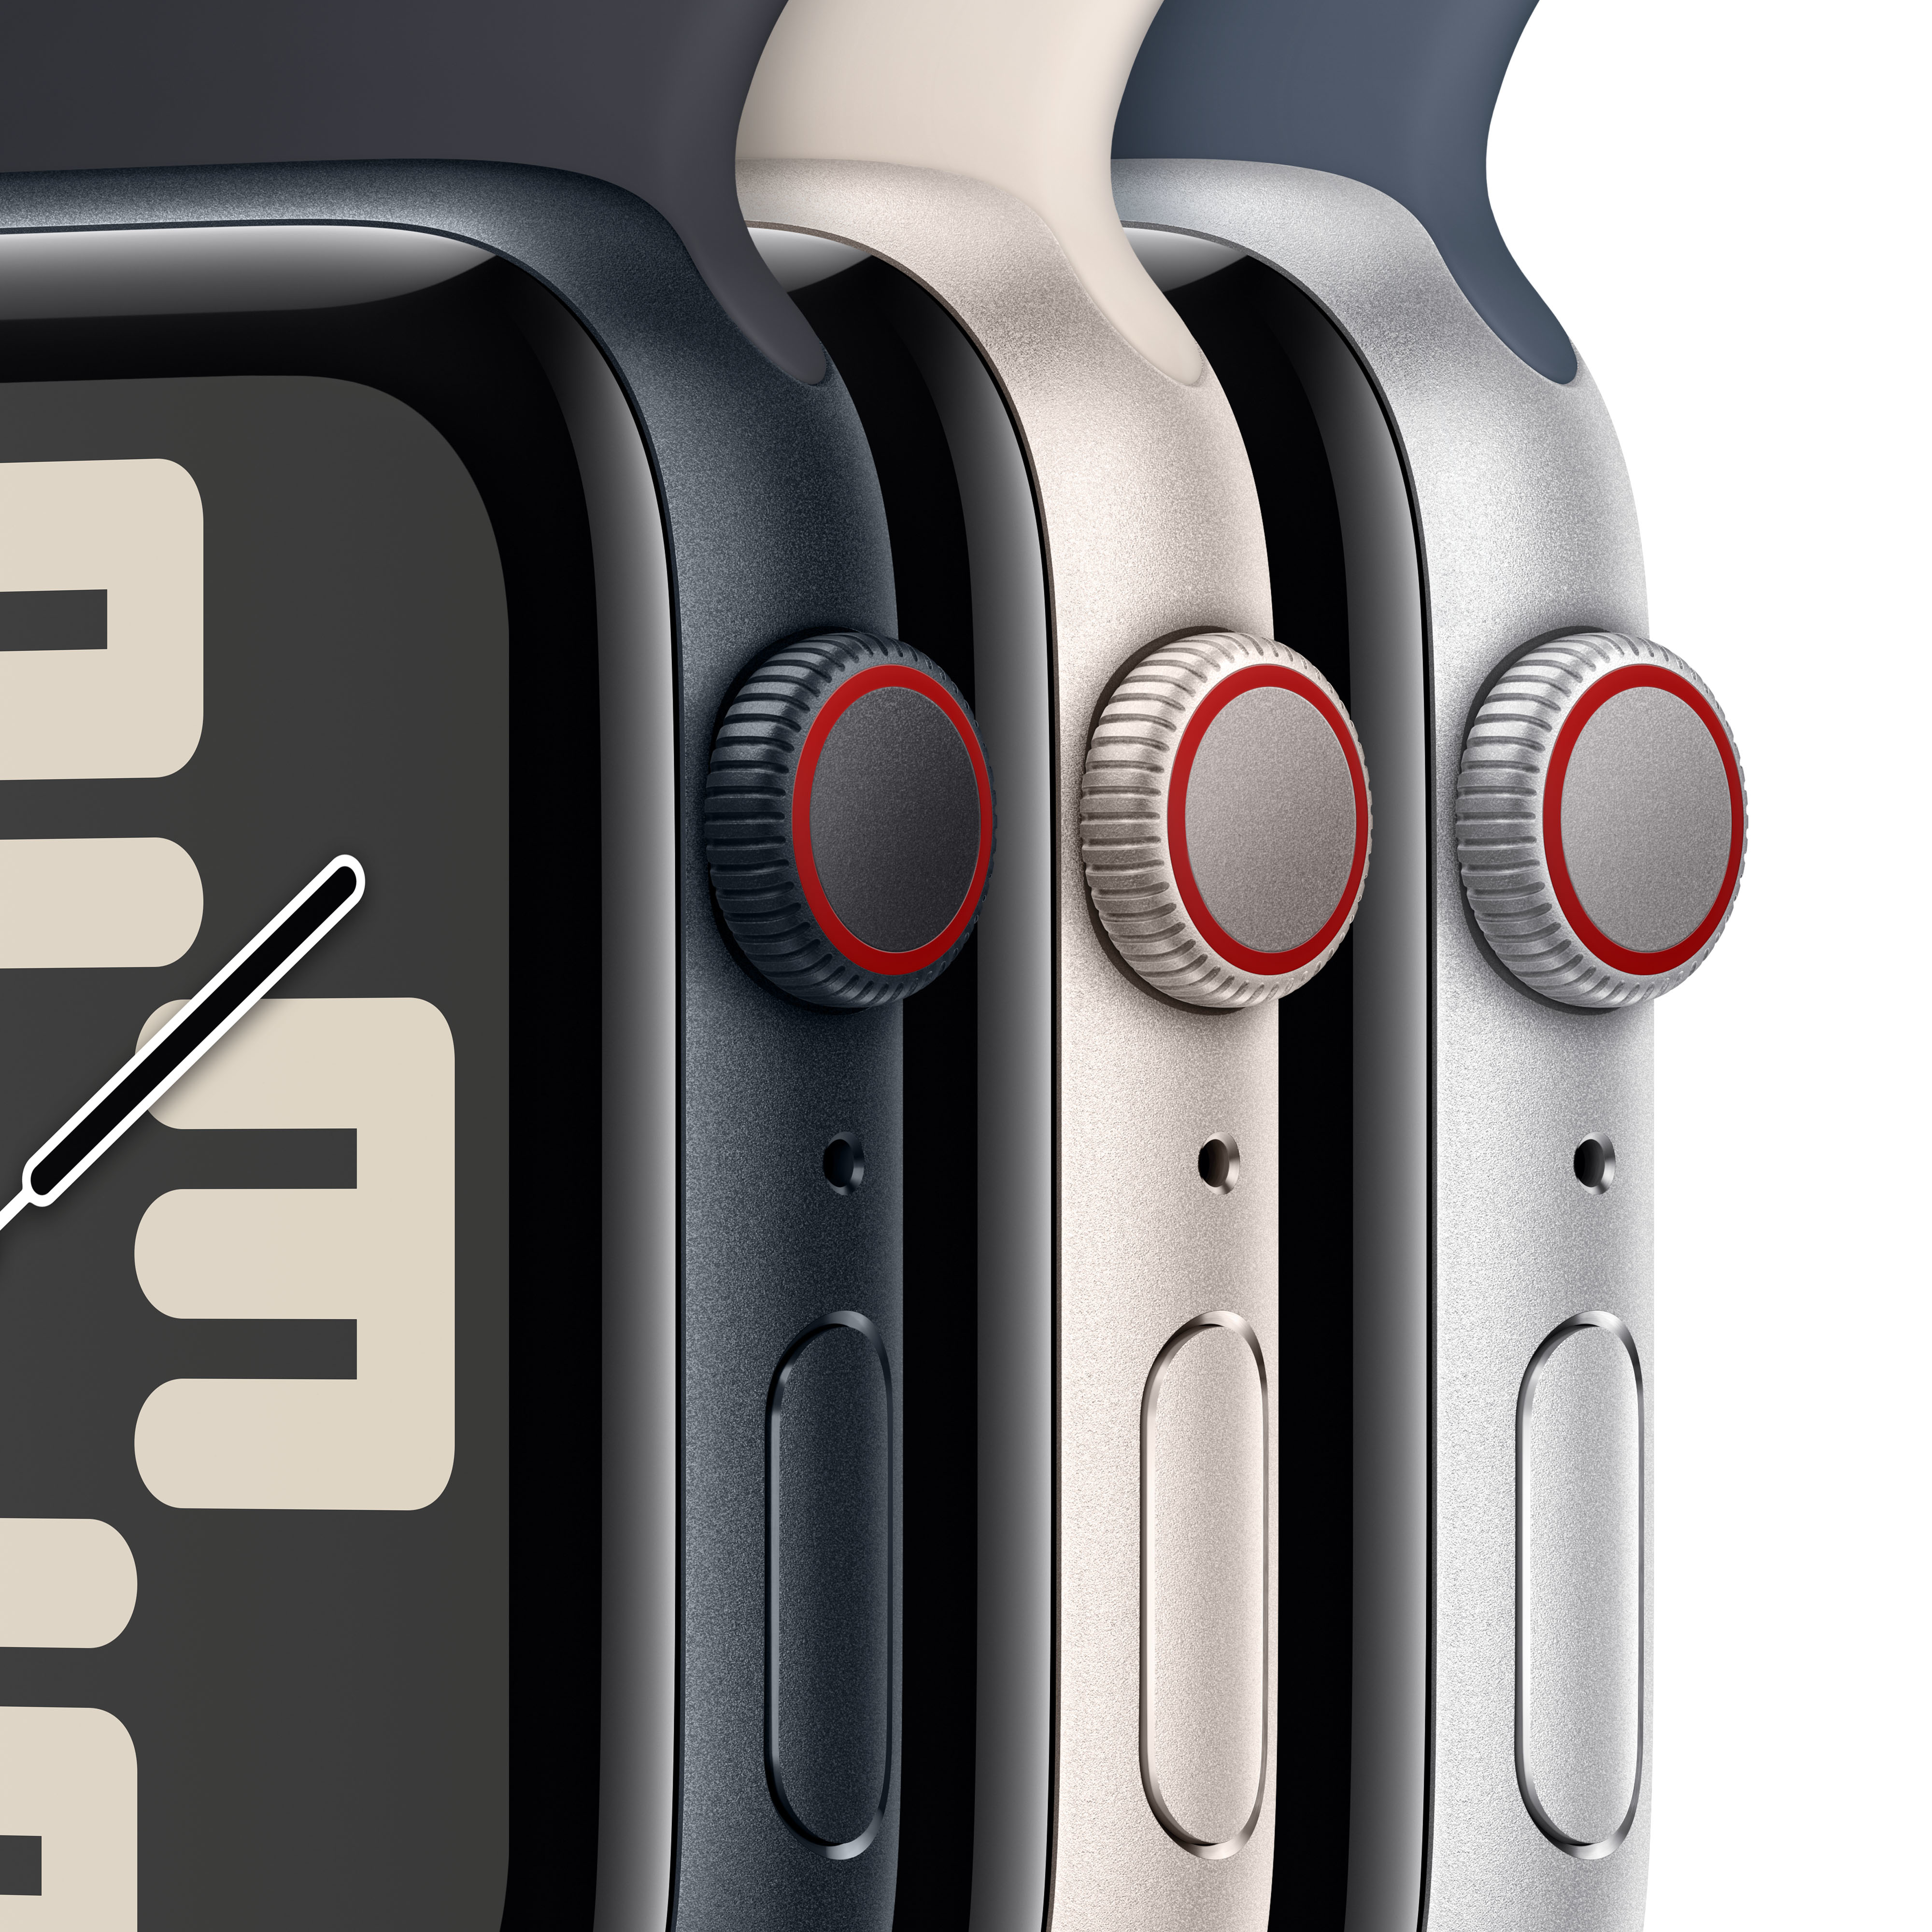 Apple - Reloj Smartwatch Apple Watch SE GPS + Cellular 40mm Silver Aluminium Case con Winter Blue Sport Loop